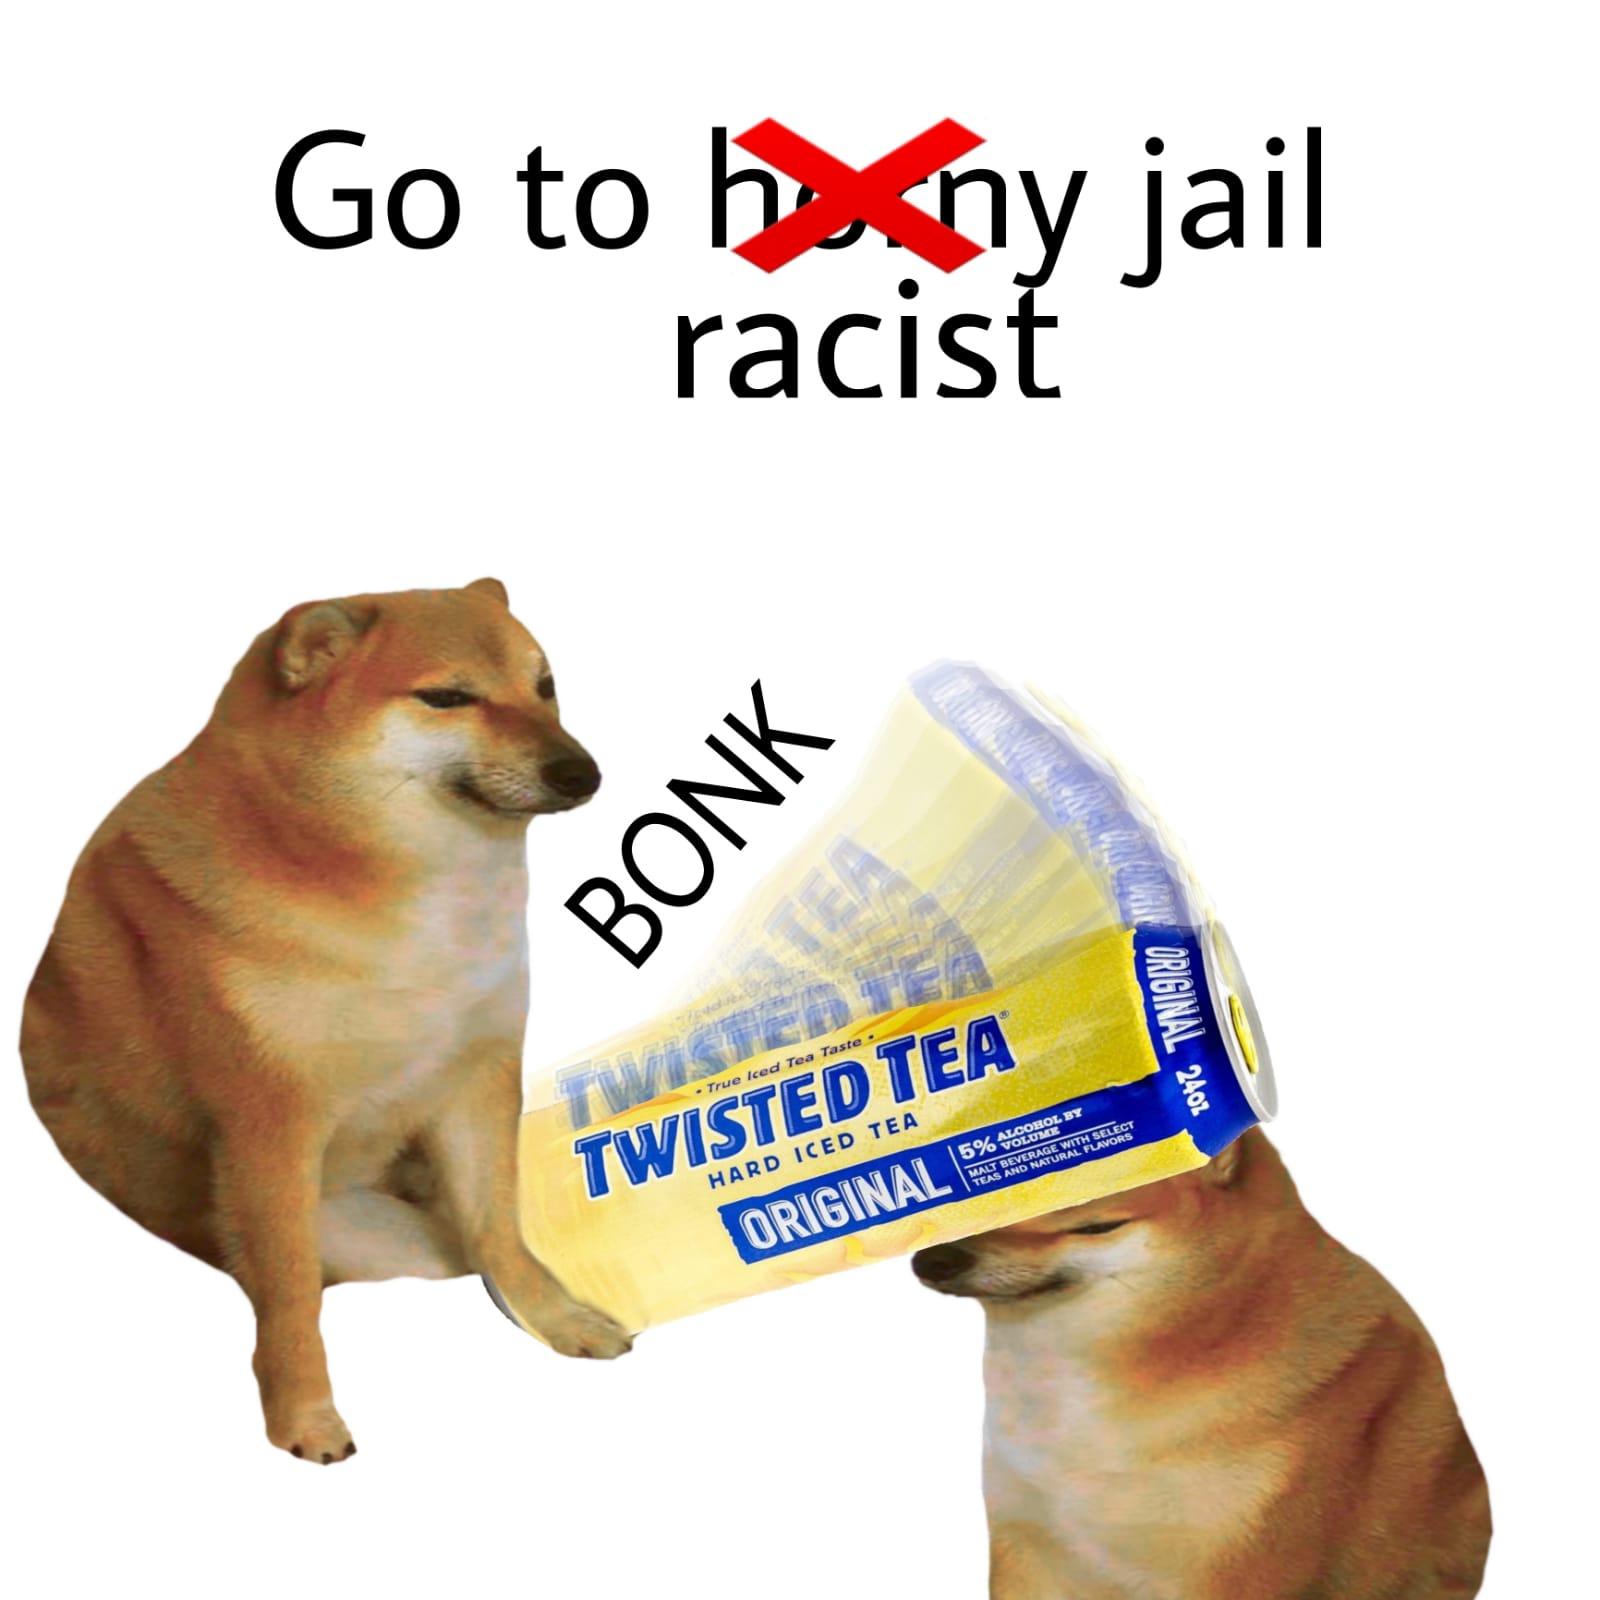 dog - Go to henny jail racist Bonk Original 2402 True Iced Tea Taste. 5% Volume Twister Te Twisted Tea Original 5% Alcobol By Beverage With Select Teas And Natural Flavors Hard Iced Tea